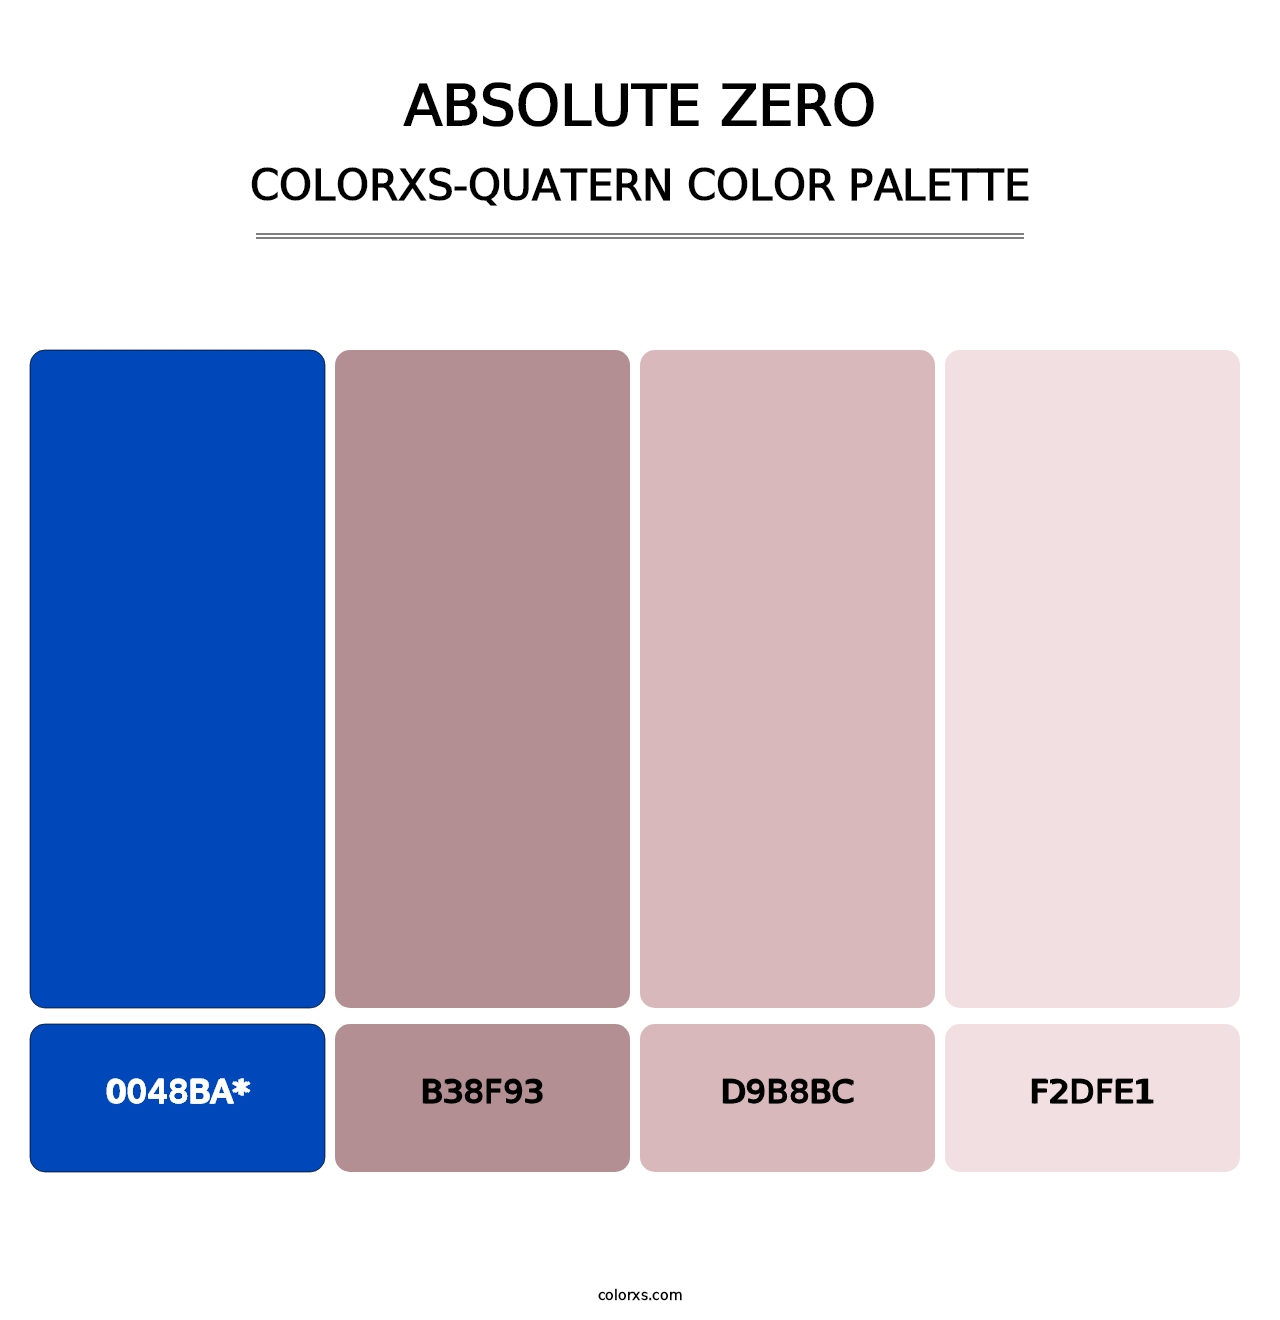 Absolute Zero - Colorxs Quatern Palette